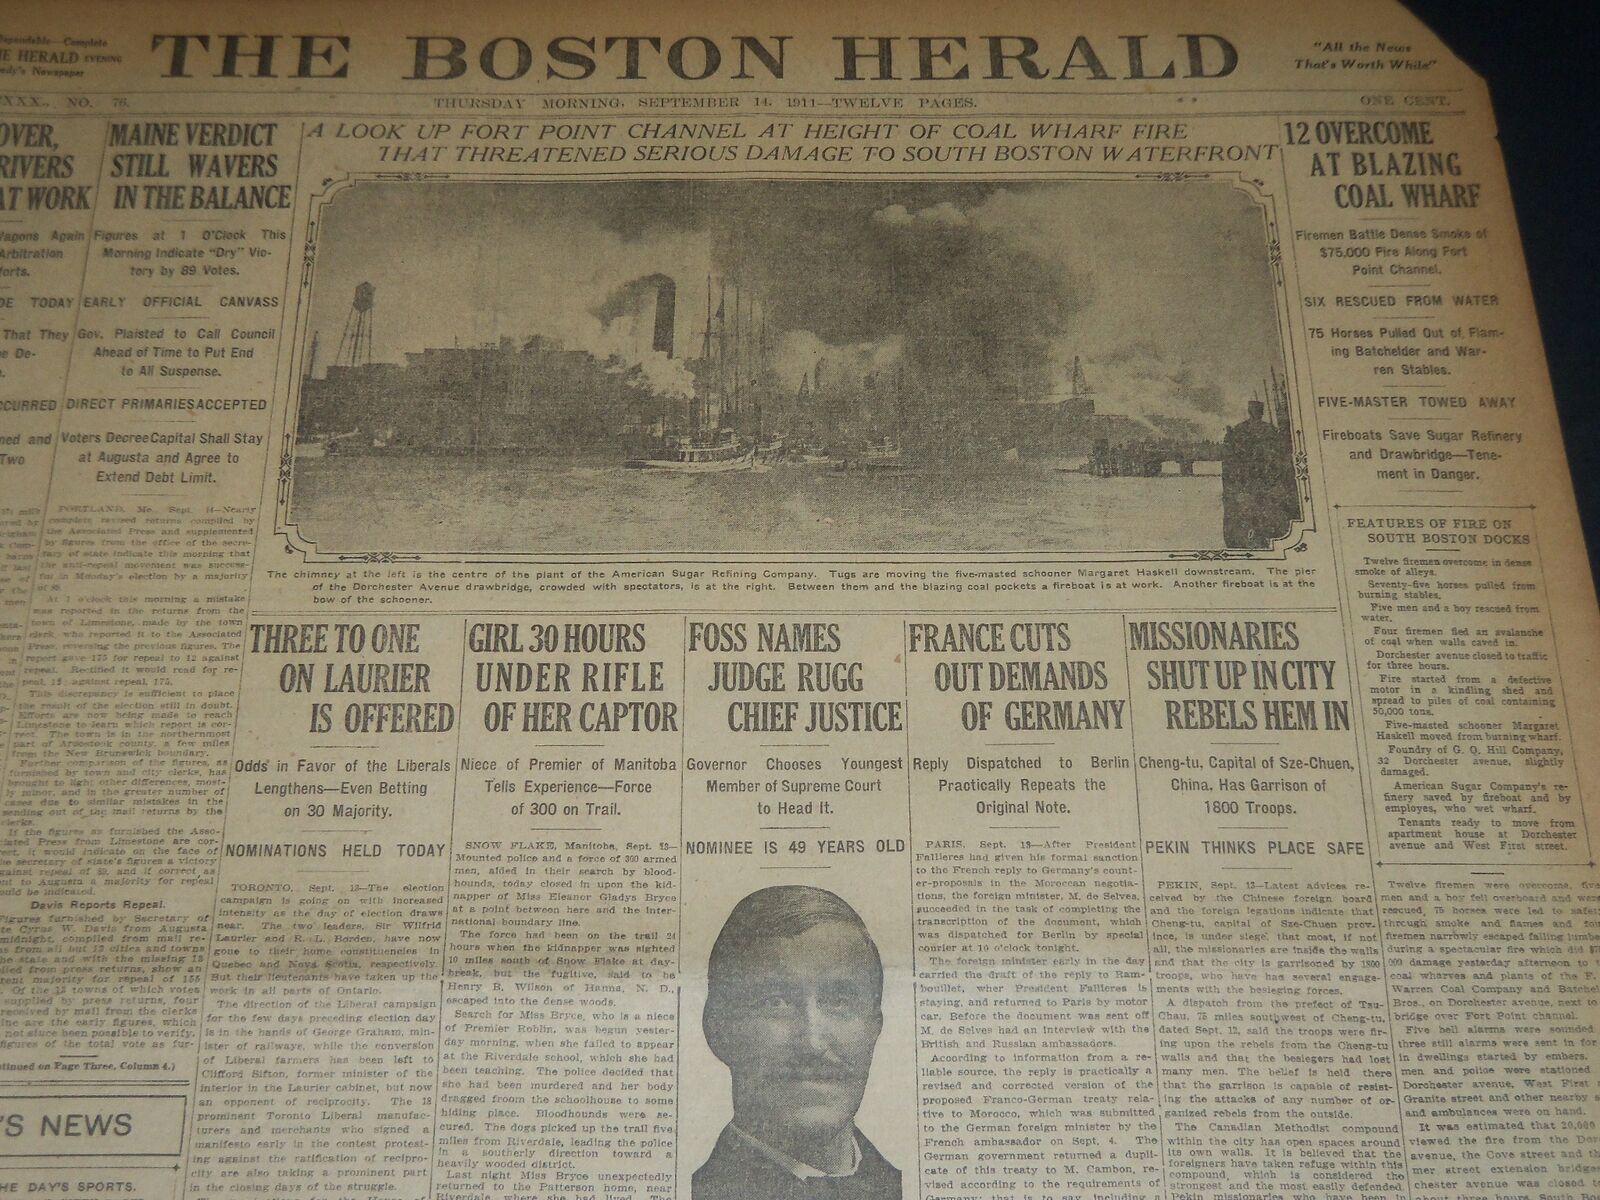 1911 SEPTEMBER 14 THE BOSTON HERALD - COAL WHARF FIRE IN SOUTH BOSTON - BH 313